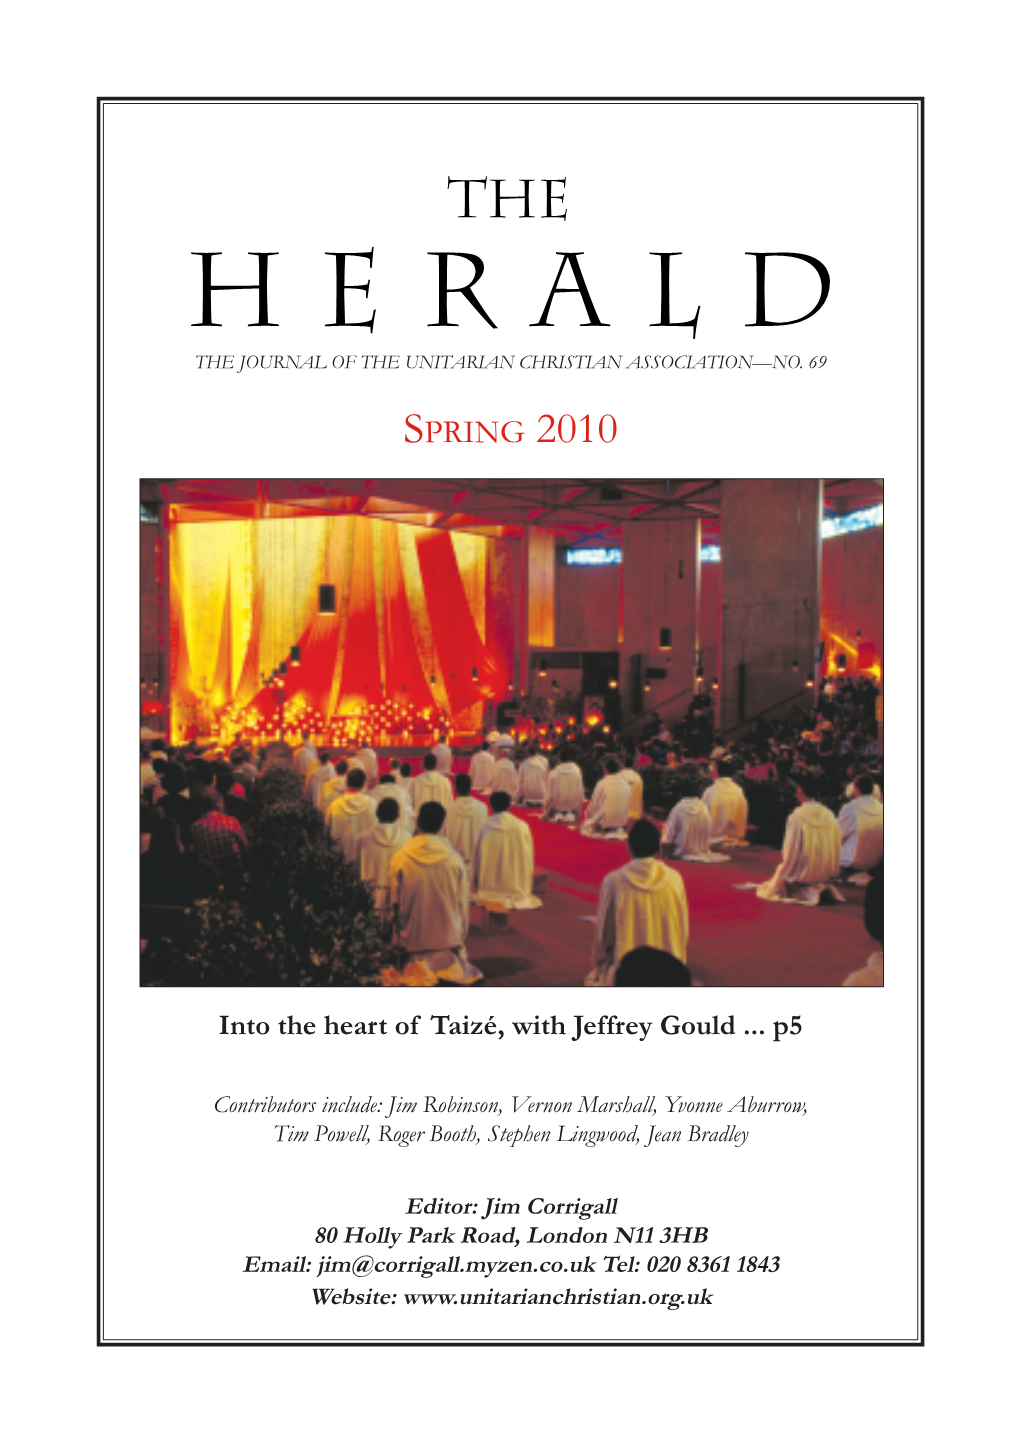 Herald Thte Journal of the Unitarian Christian Association—No